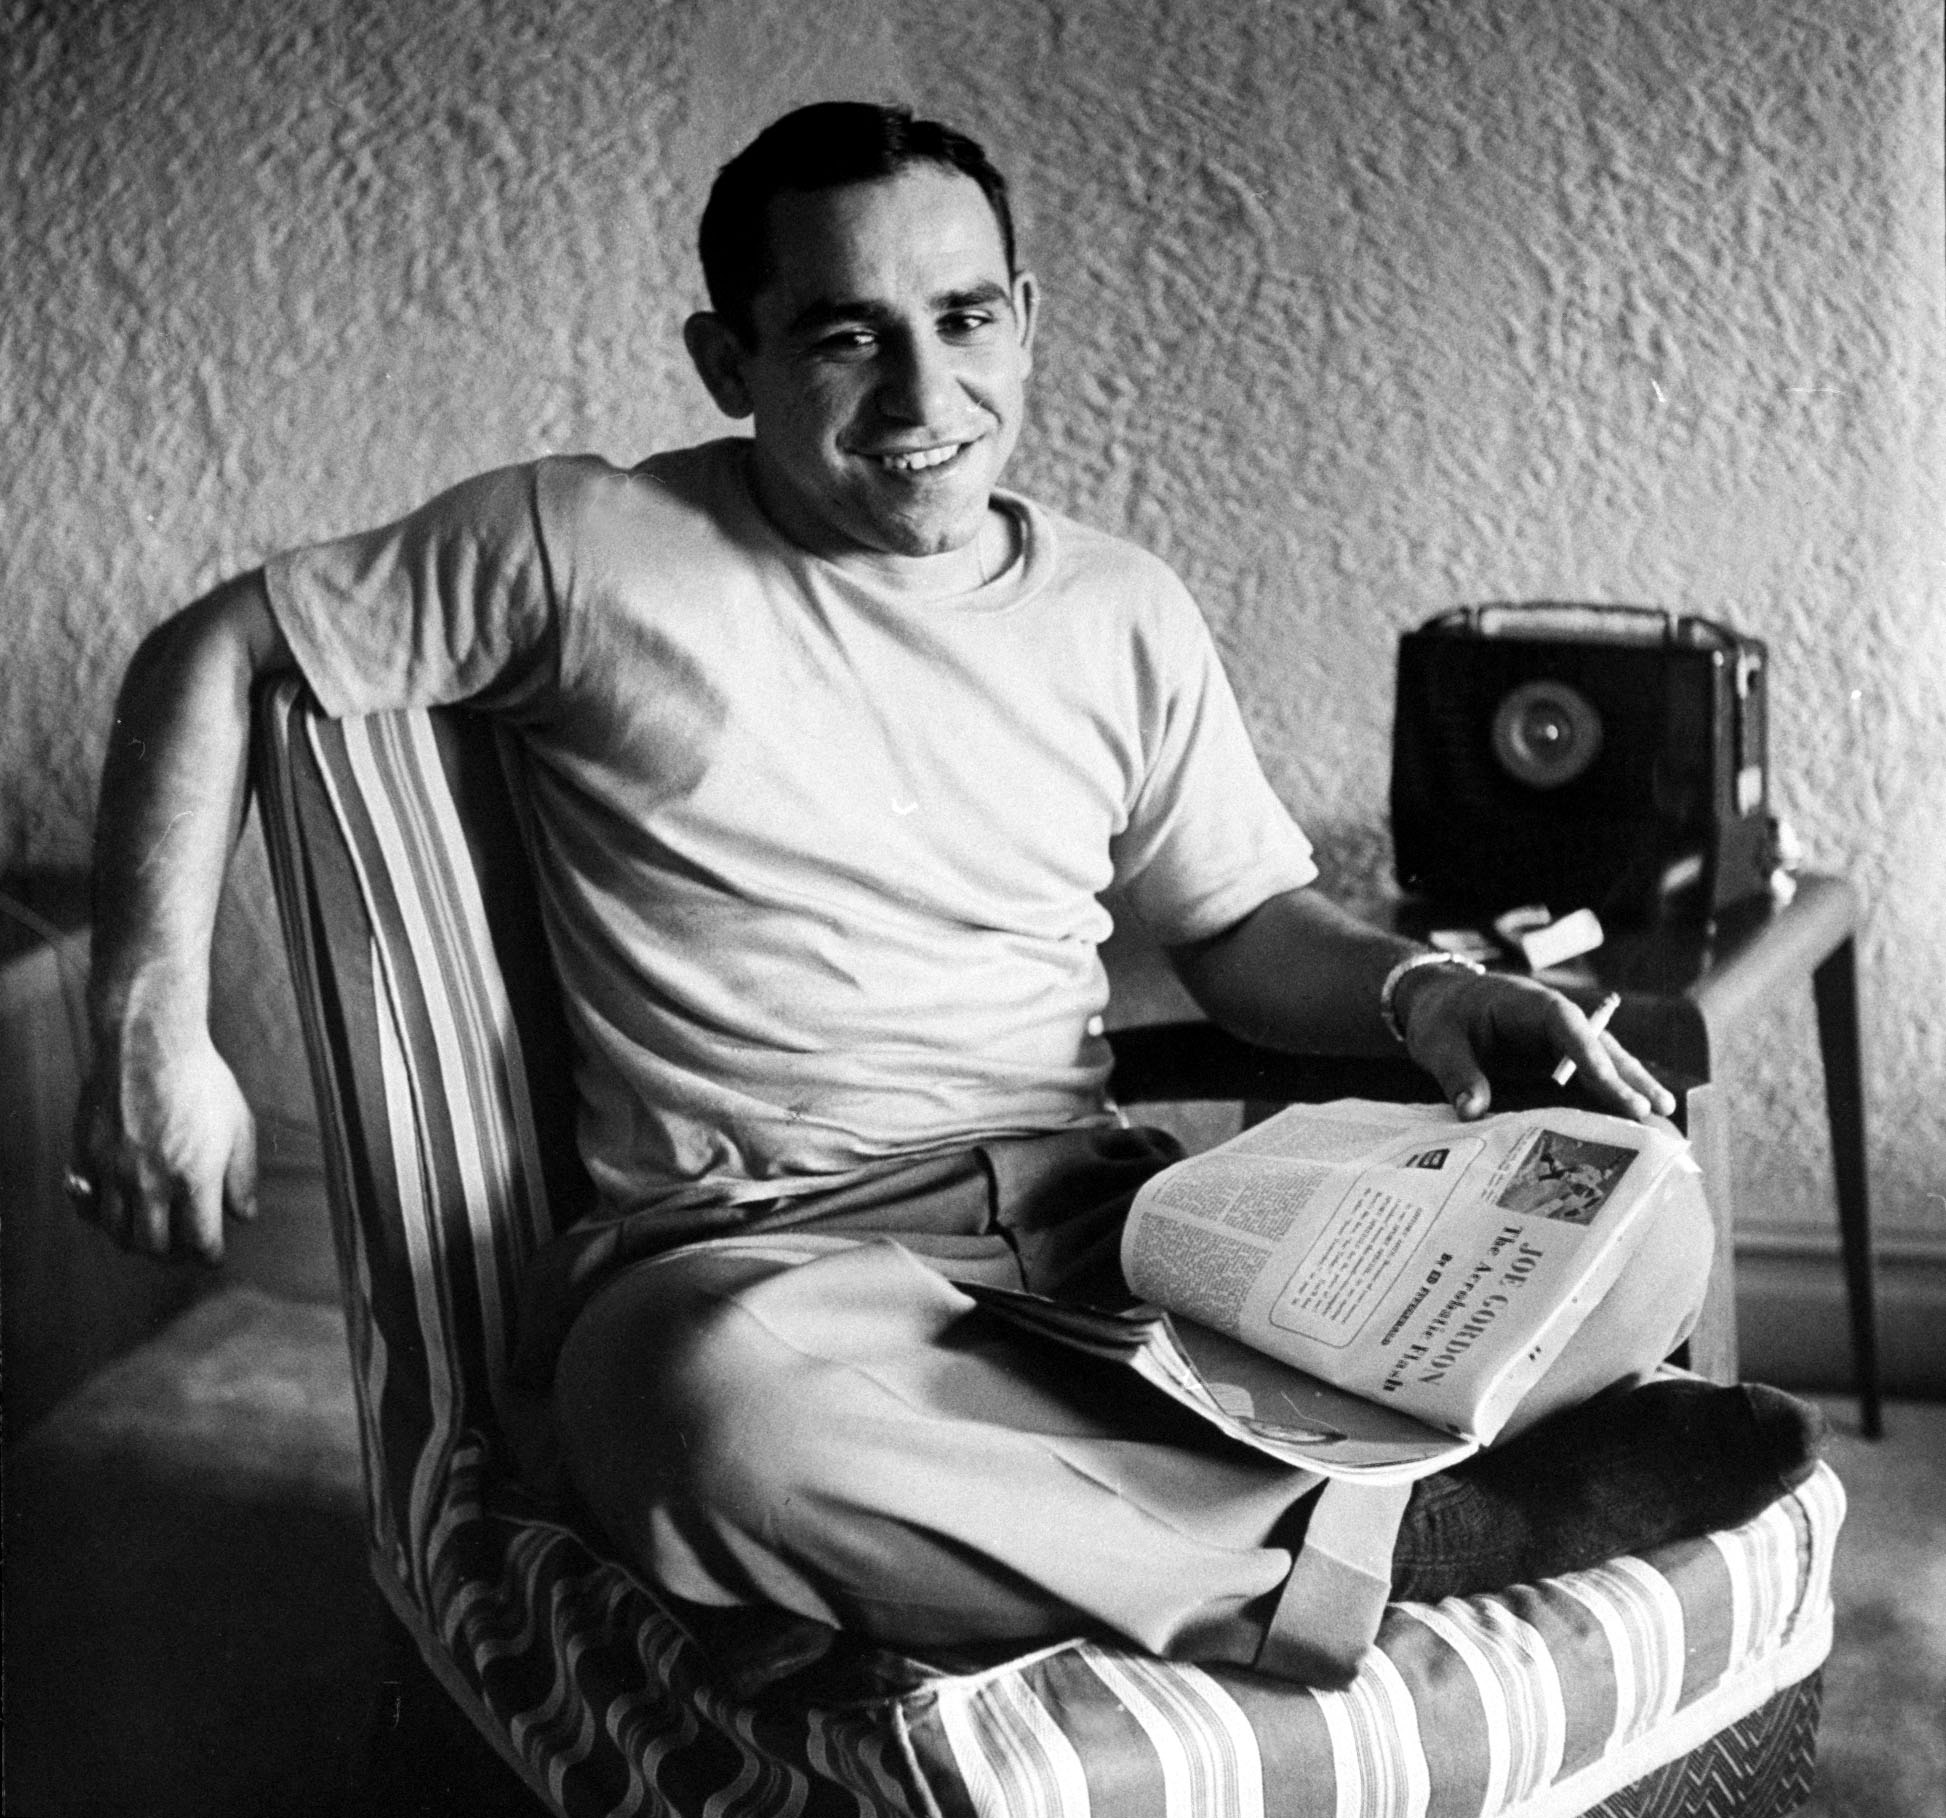 Baseball player Yogi Berra relaxing at home, 1949.